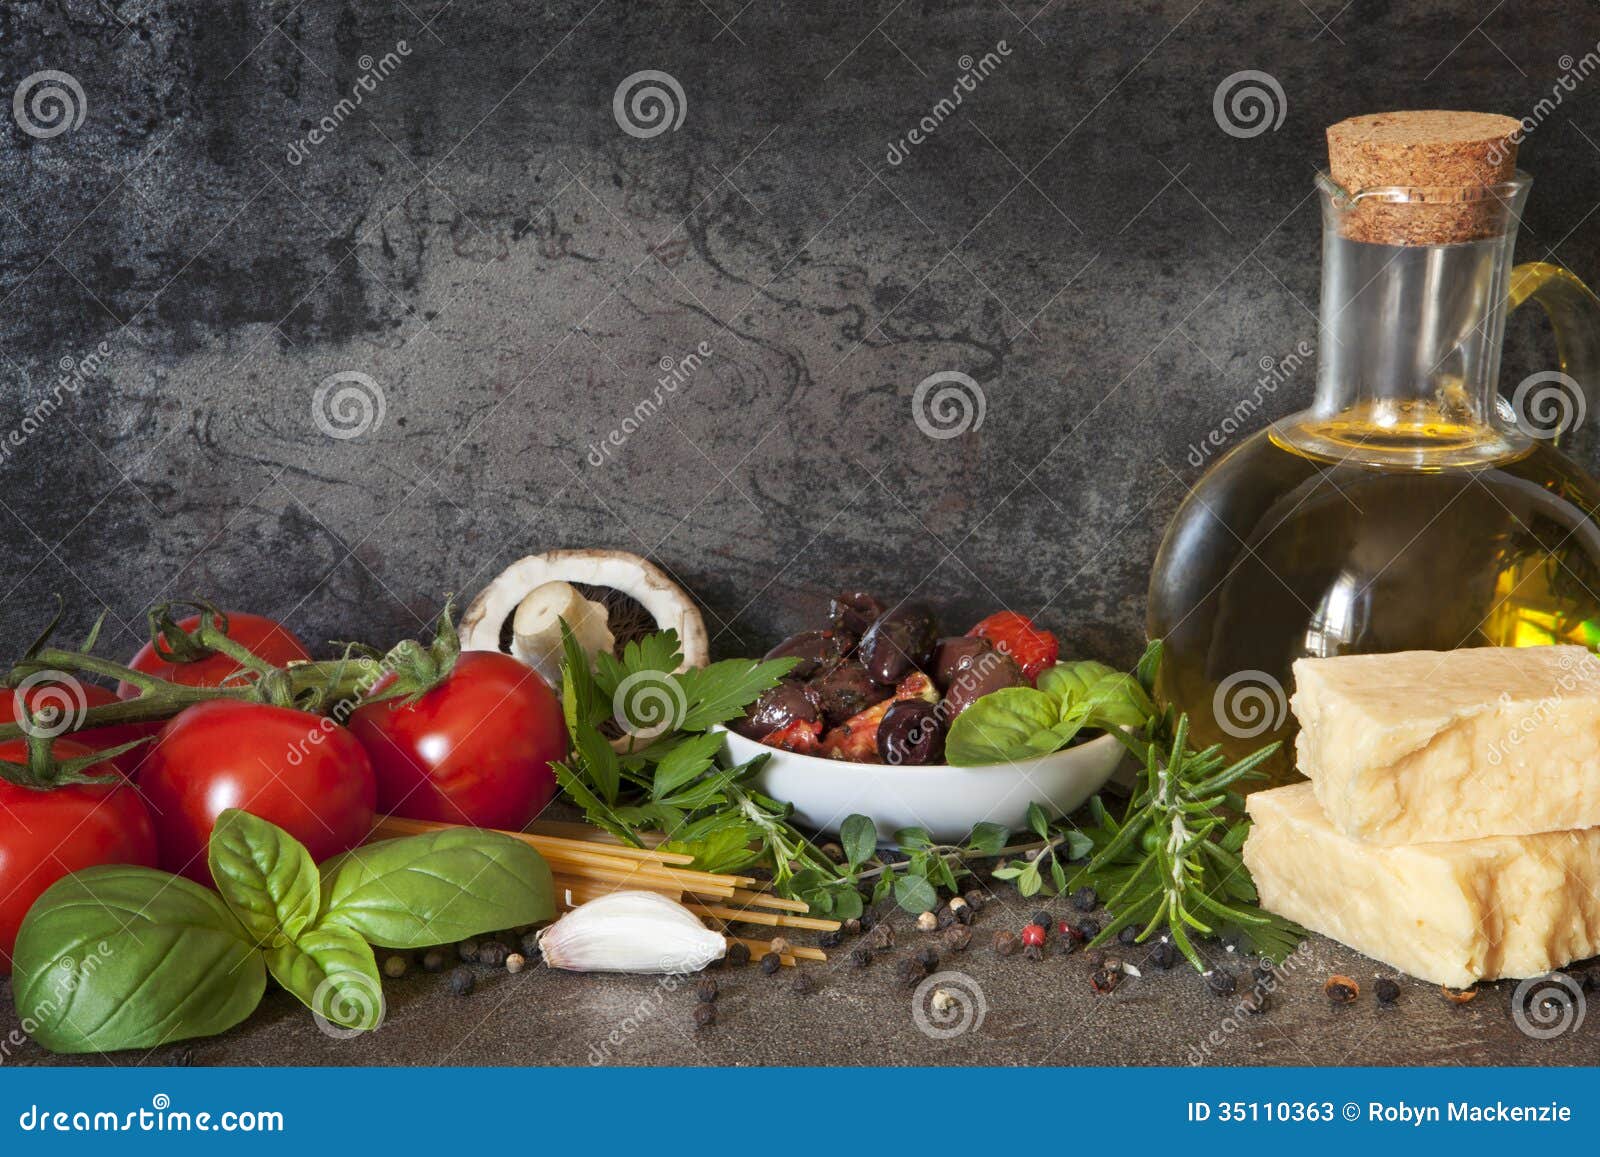 italian food background